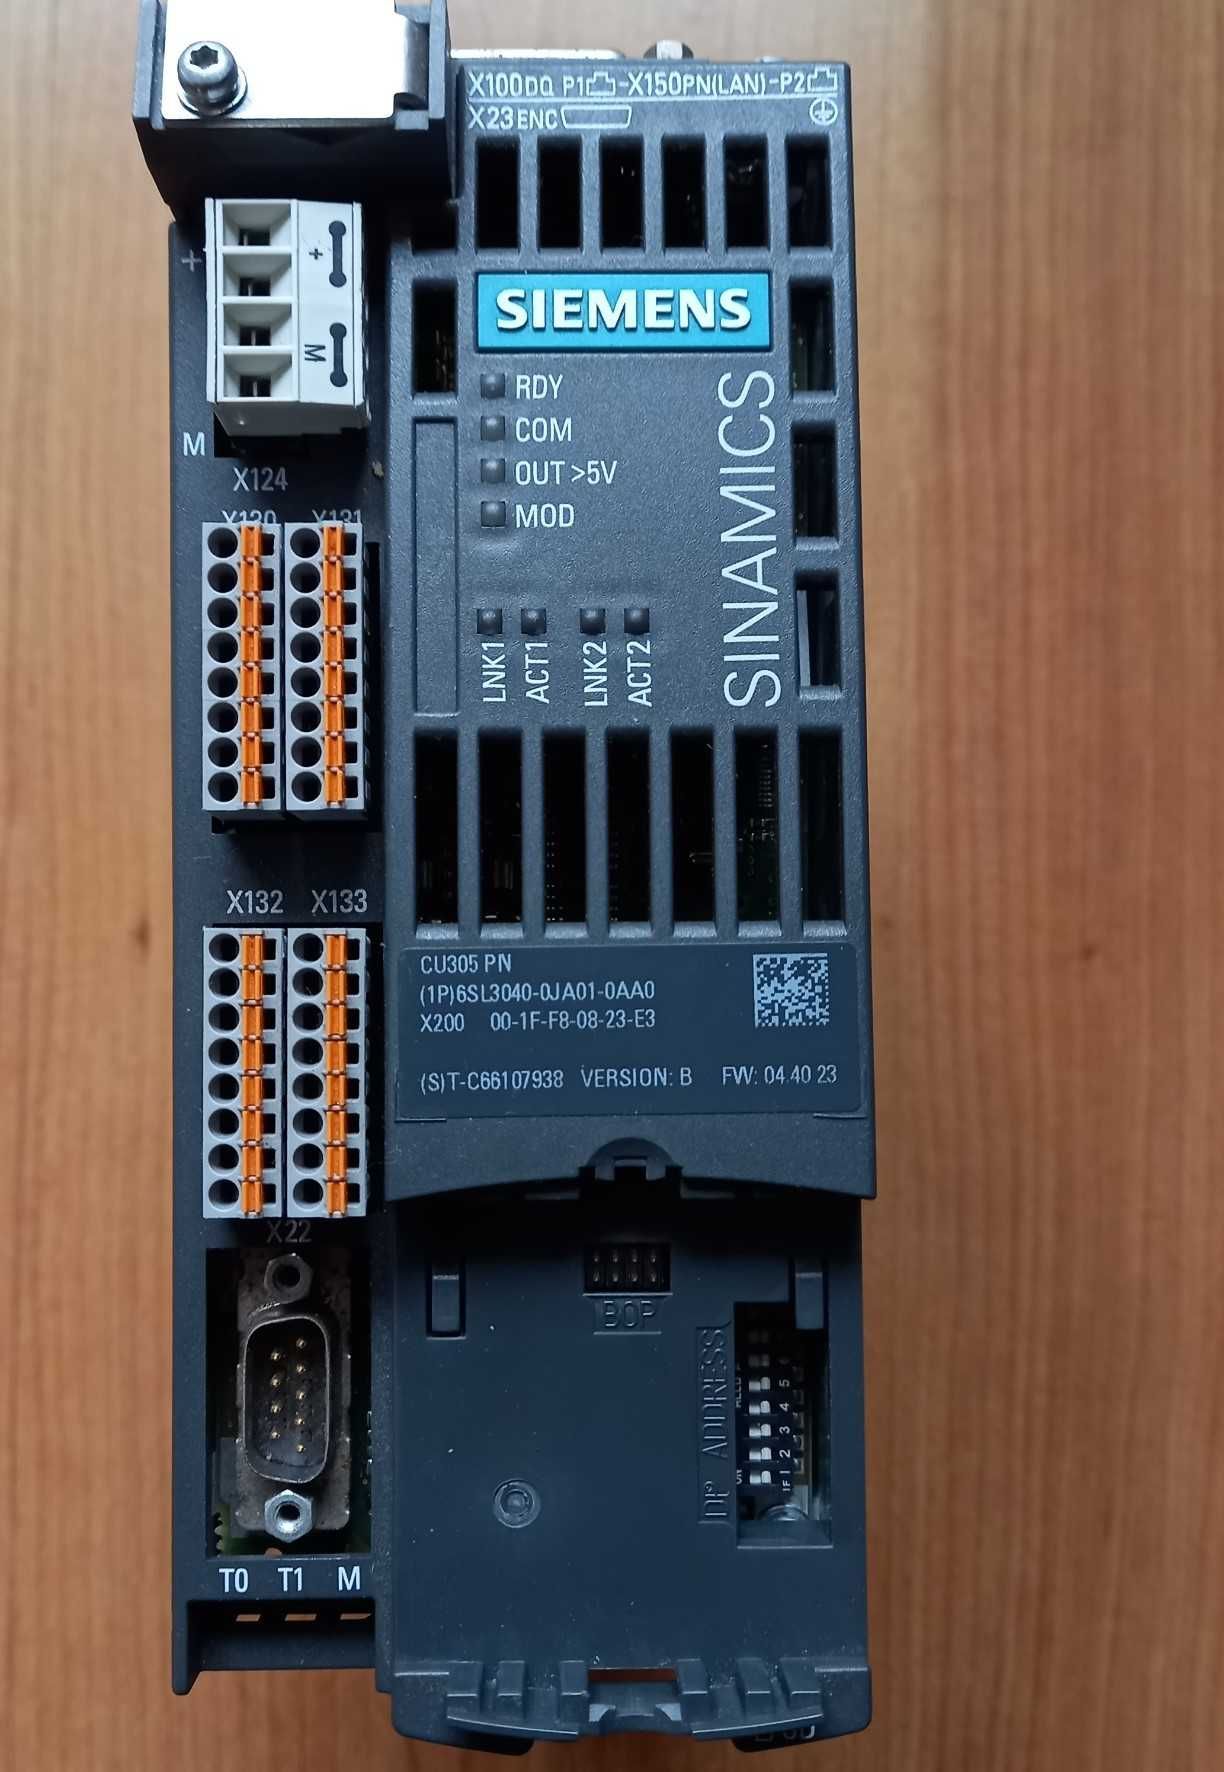 Siemens, Sinamics CU305 PN, PM340, CU320-2DP, Double Motor Module